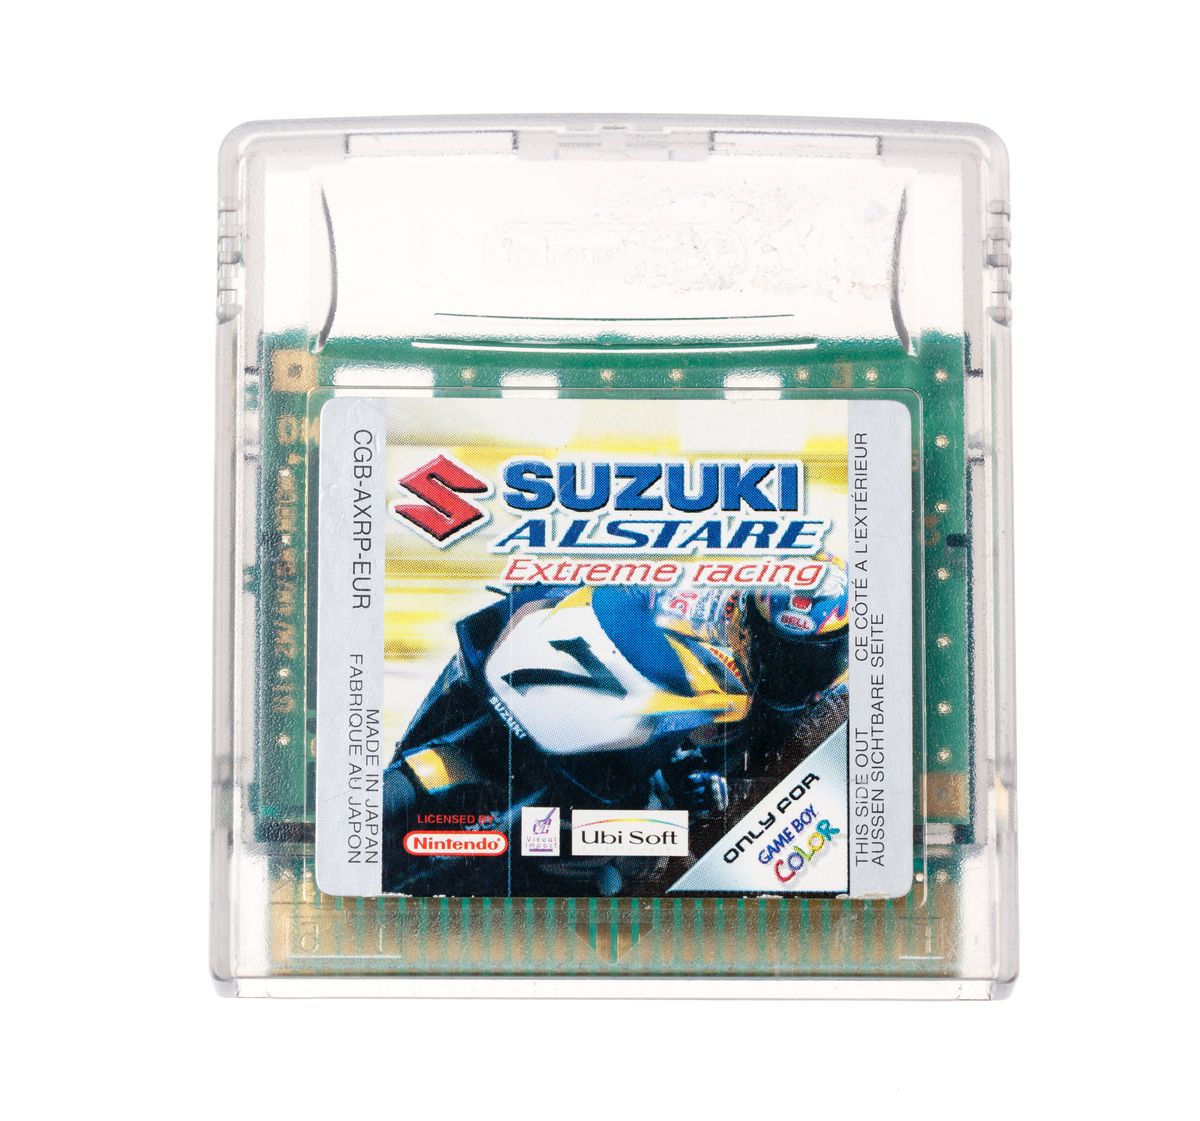 Suzuki Astare Extreme Racing | Gameboy Color Games | RetroNintendoKopen.nl